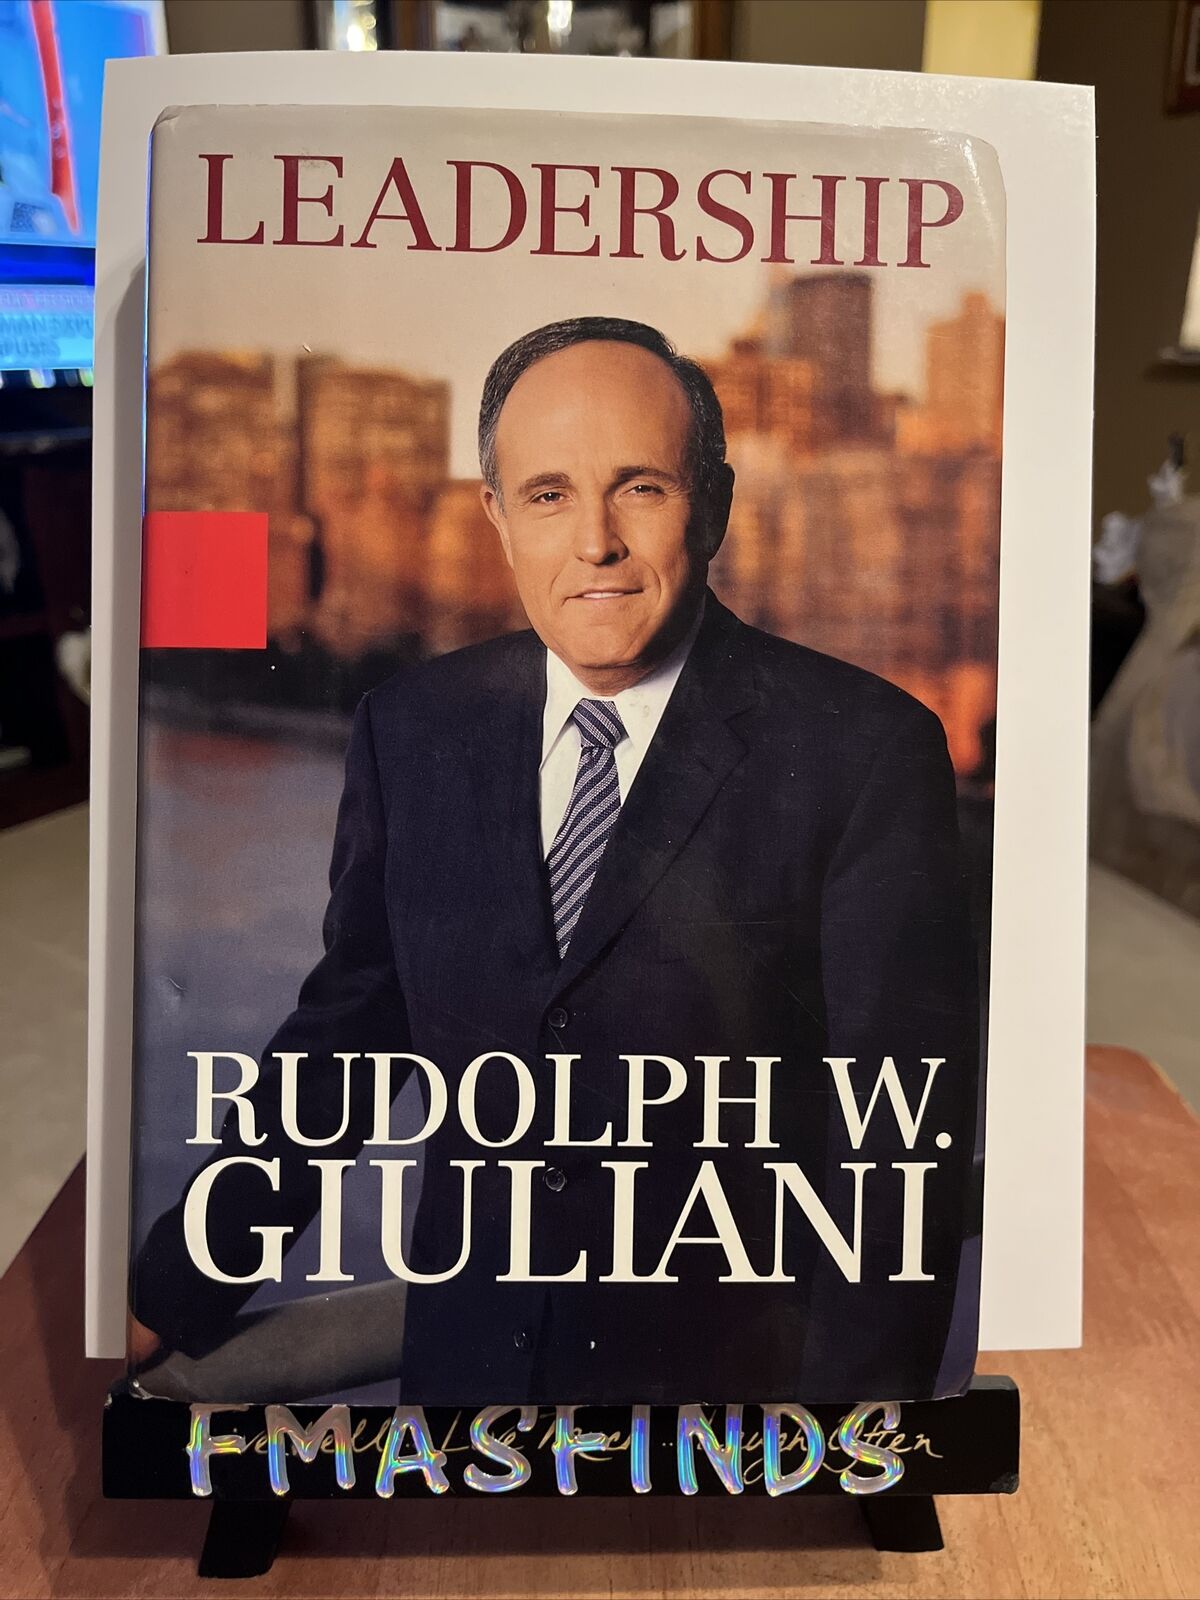 RUDY GIULIANI MAYOR OF NEW YORK NY Signed Book Leadership Autographed